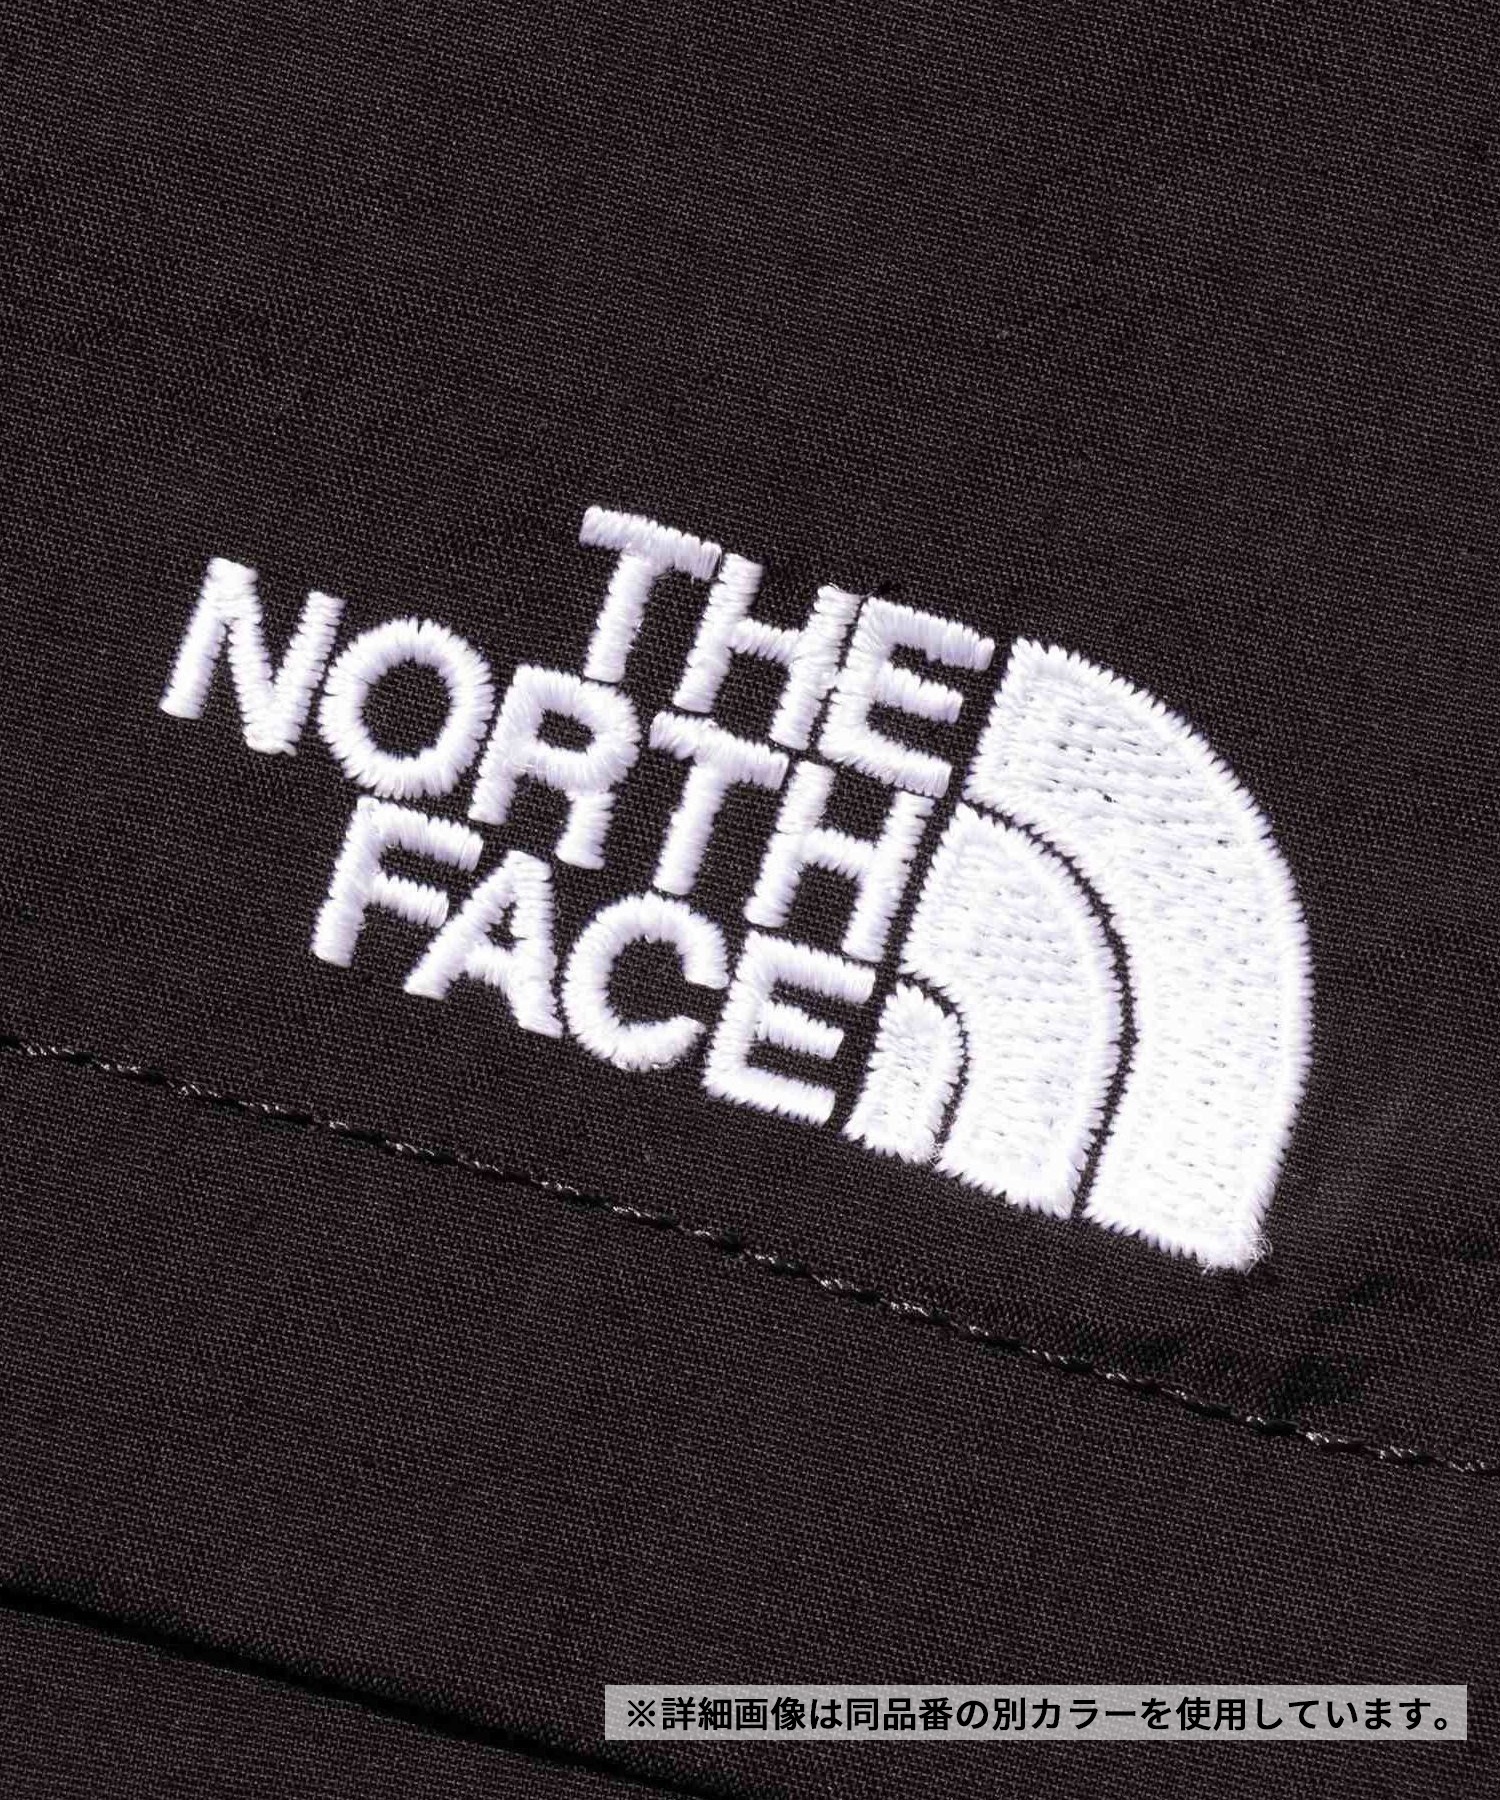 THE NORTH FACE ザ・ノース・フェイス メンズ バーサタイルミッド ショーツ ハーフパンツ 撥水 UVカット NB42331 BA(BA-S)